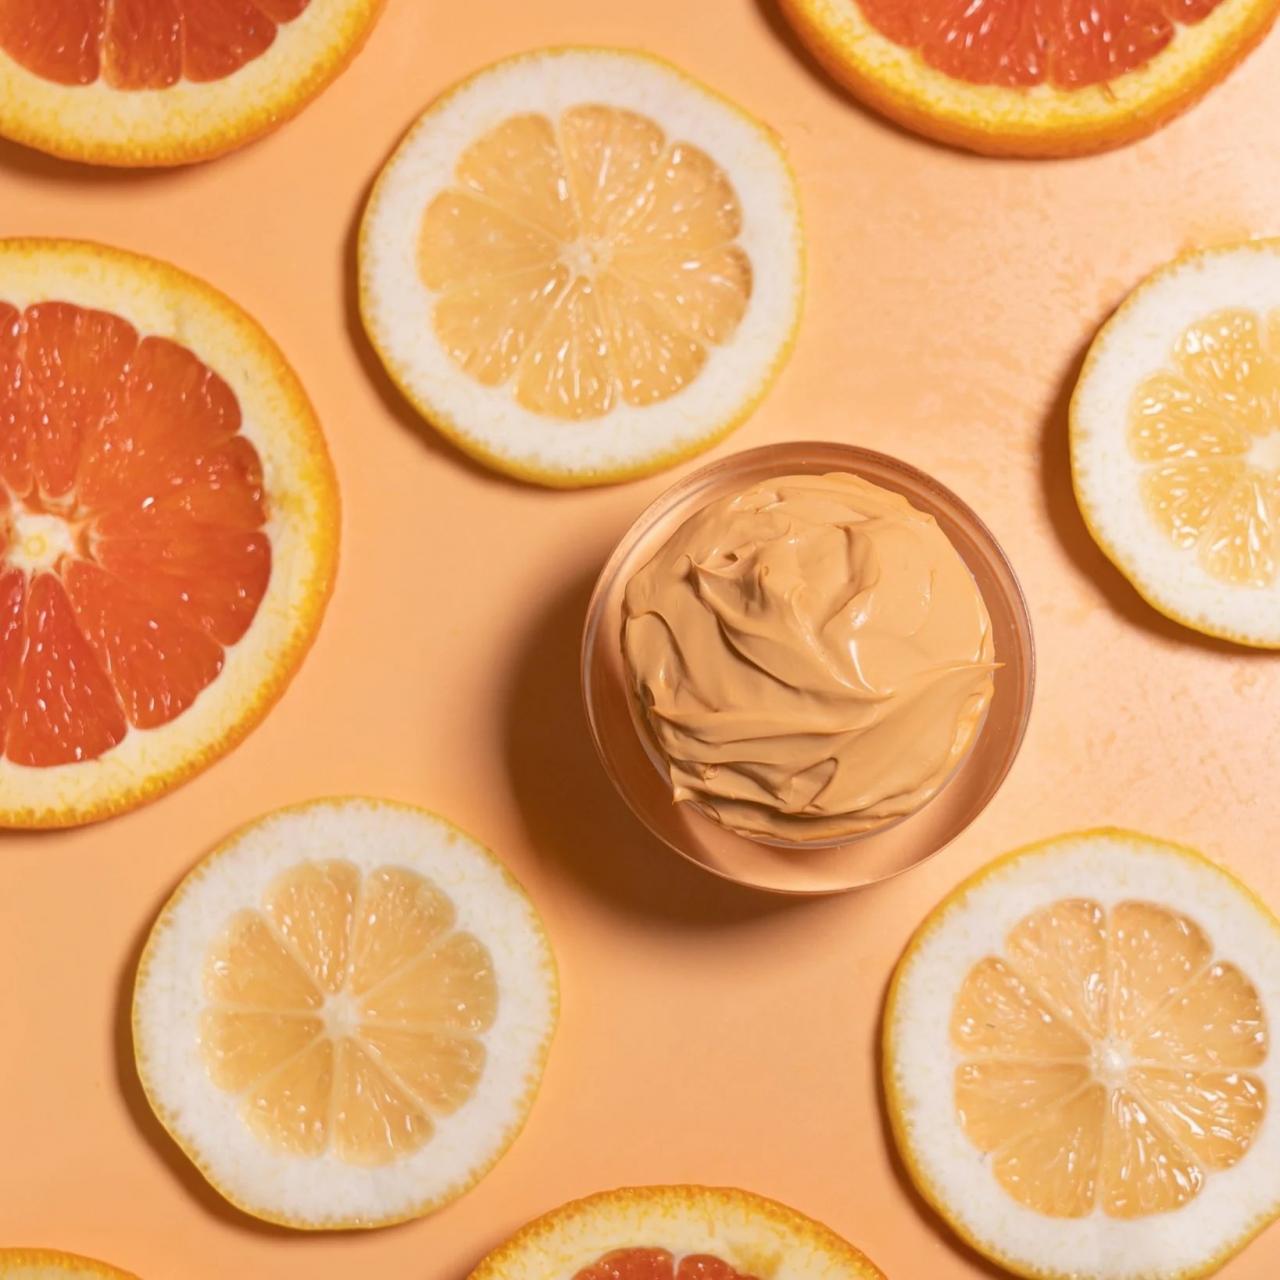 Sonäge Skincare Saffron Energizing Vitamin Mask, Revitalize Your Skin with Nature’s Elixir